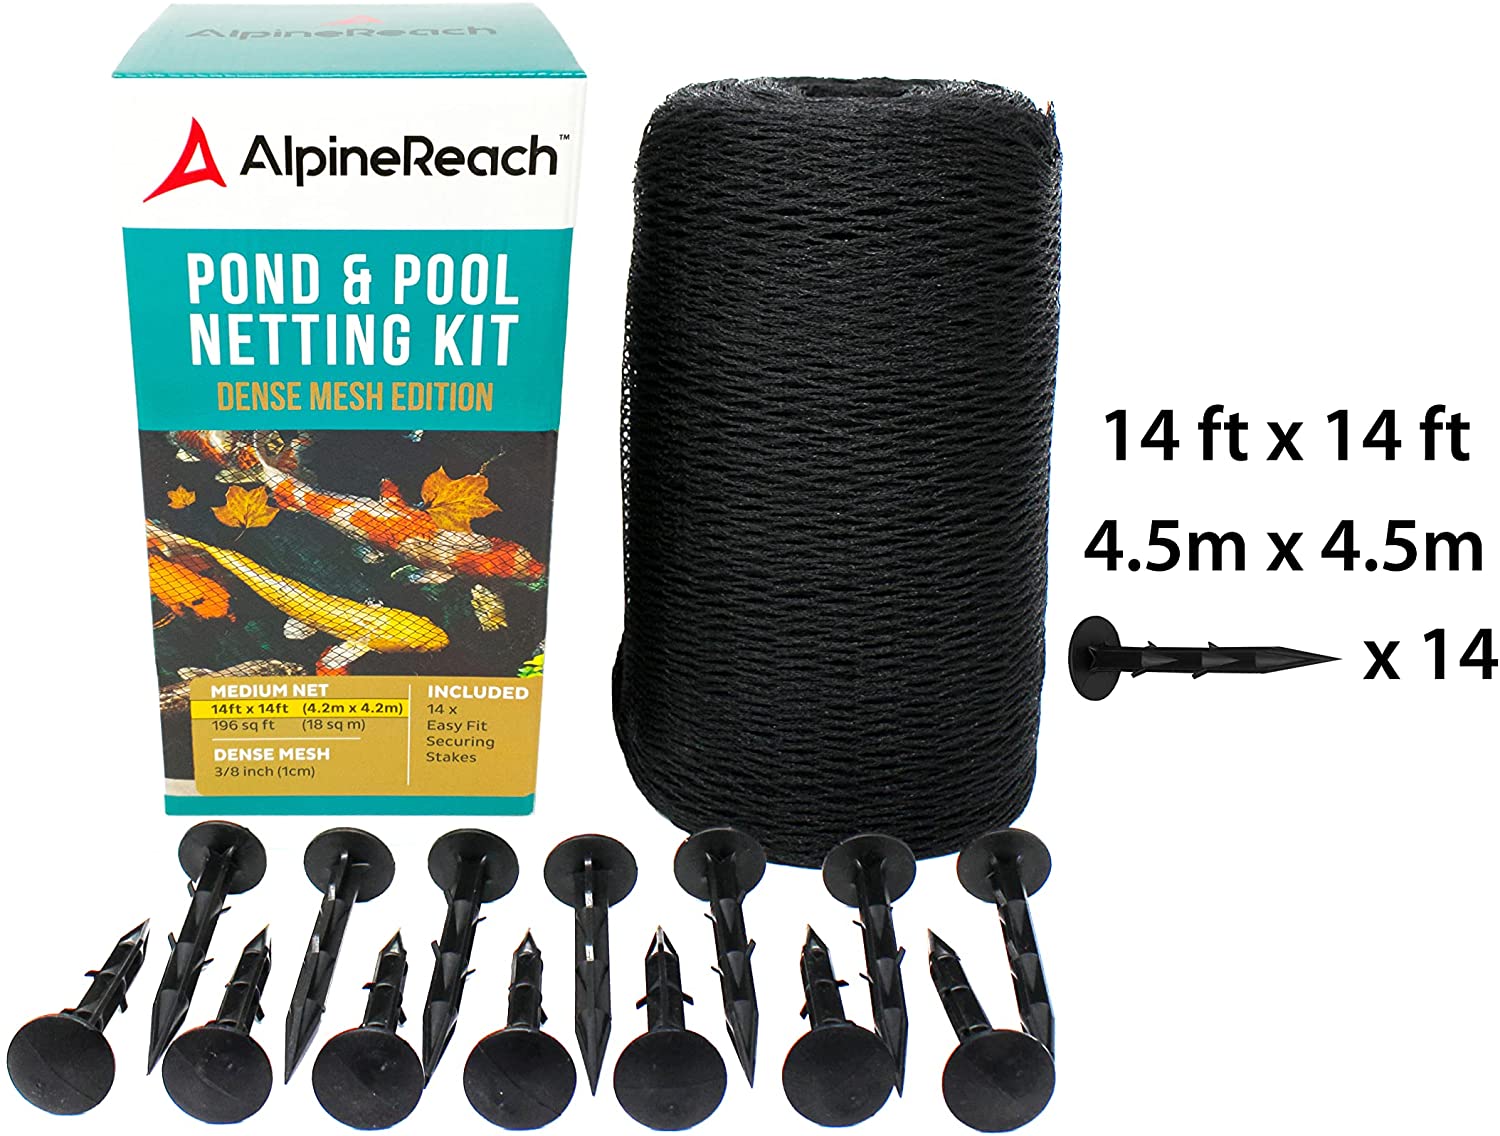 AlpineReach Koi Pond Netting Kit 14 x 14 ft Black Heavy Duty Woven Fine Mesh Net Cover for Leaves - Protects Koi Fish from Blue